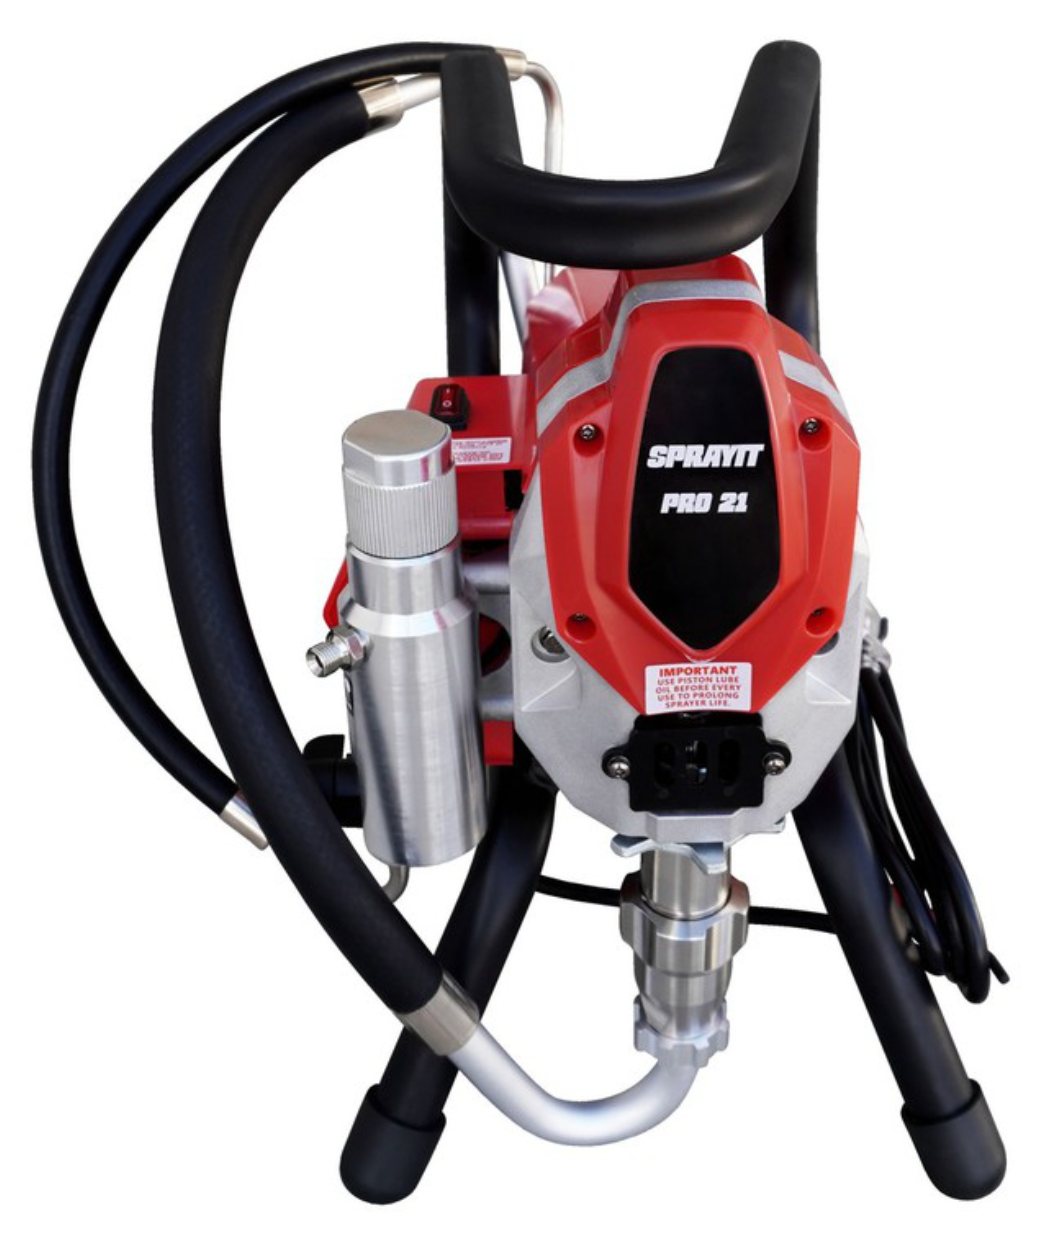 SPRAYIT PRO 21 Electric Professional  Airless Paint Sprayer